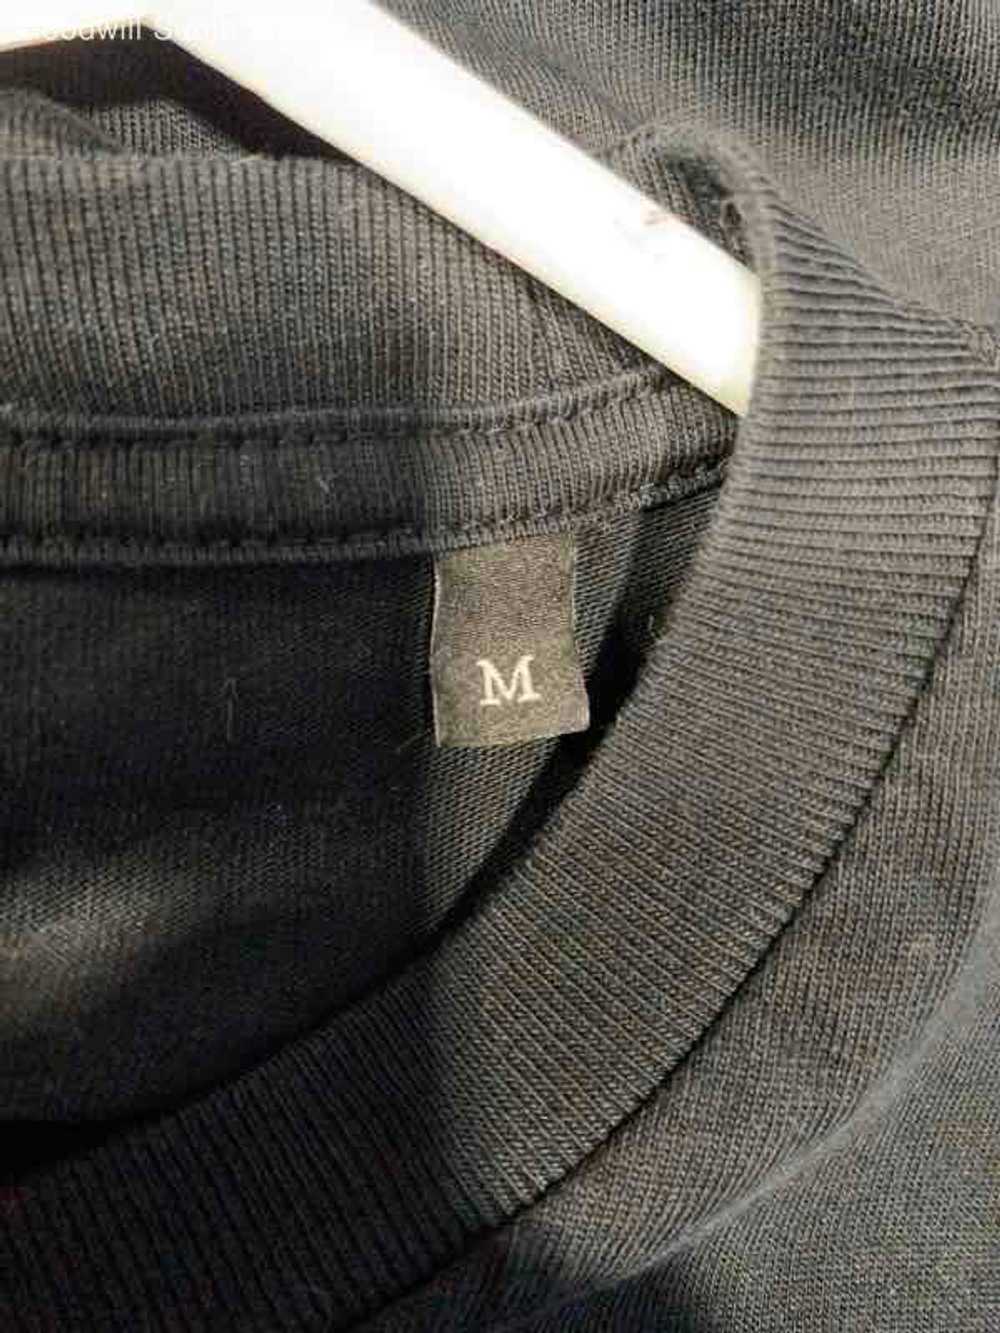 Diesel Mens Black Graphic Shirt Size M - image 5